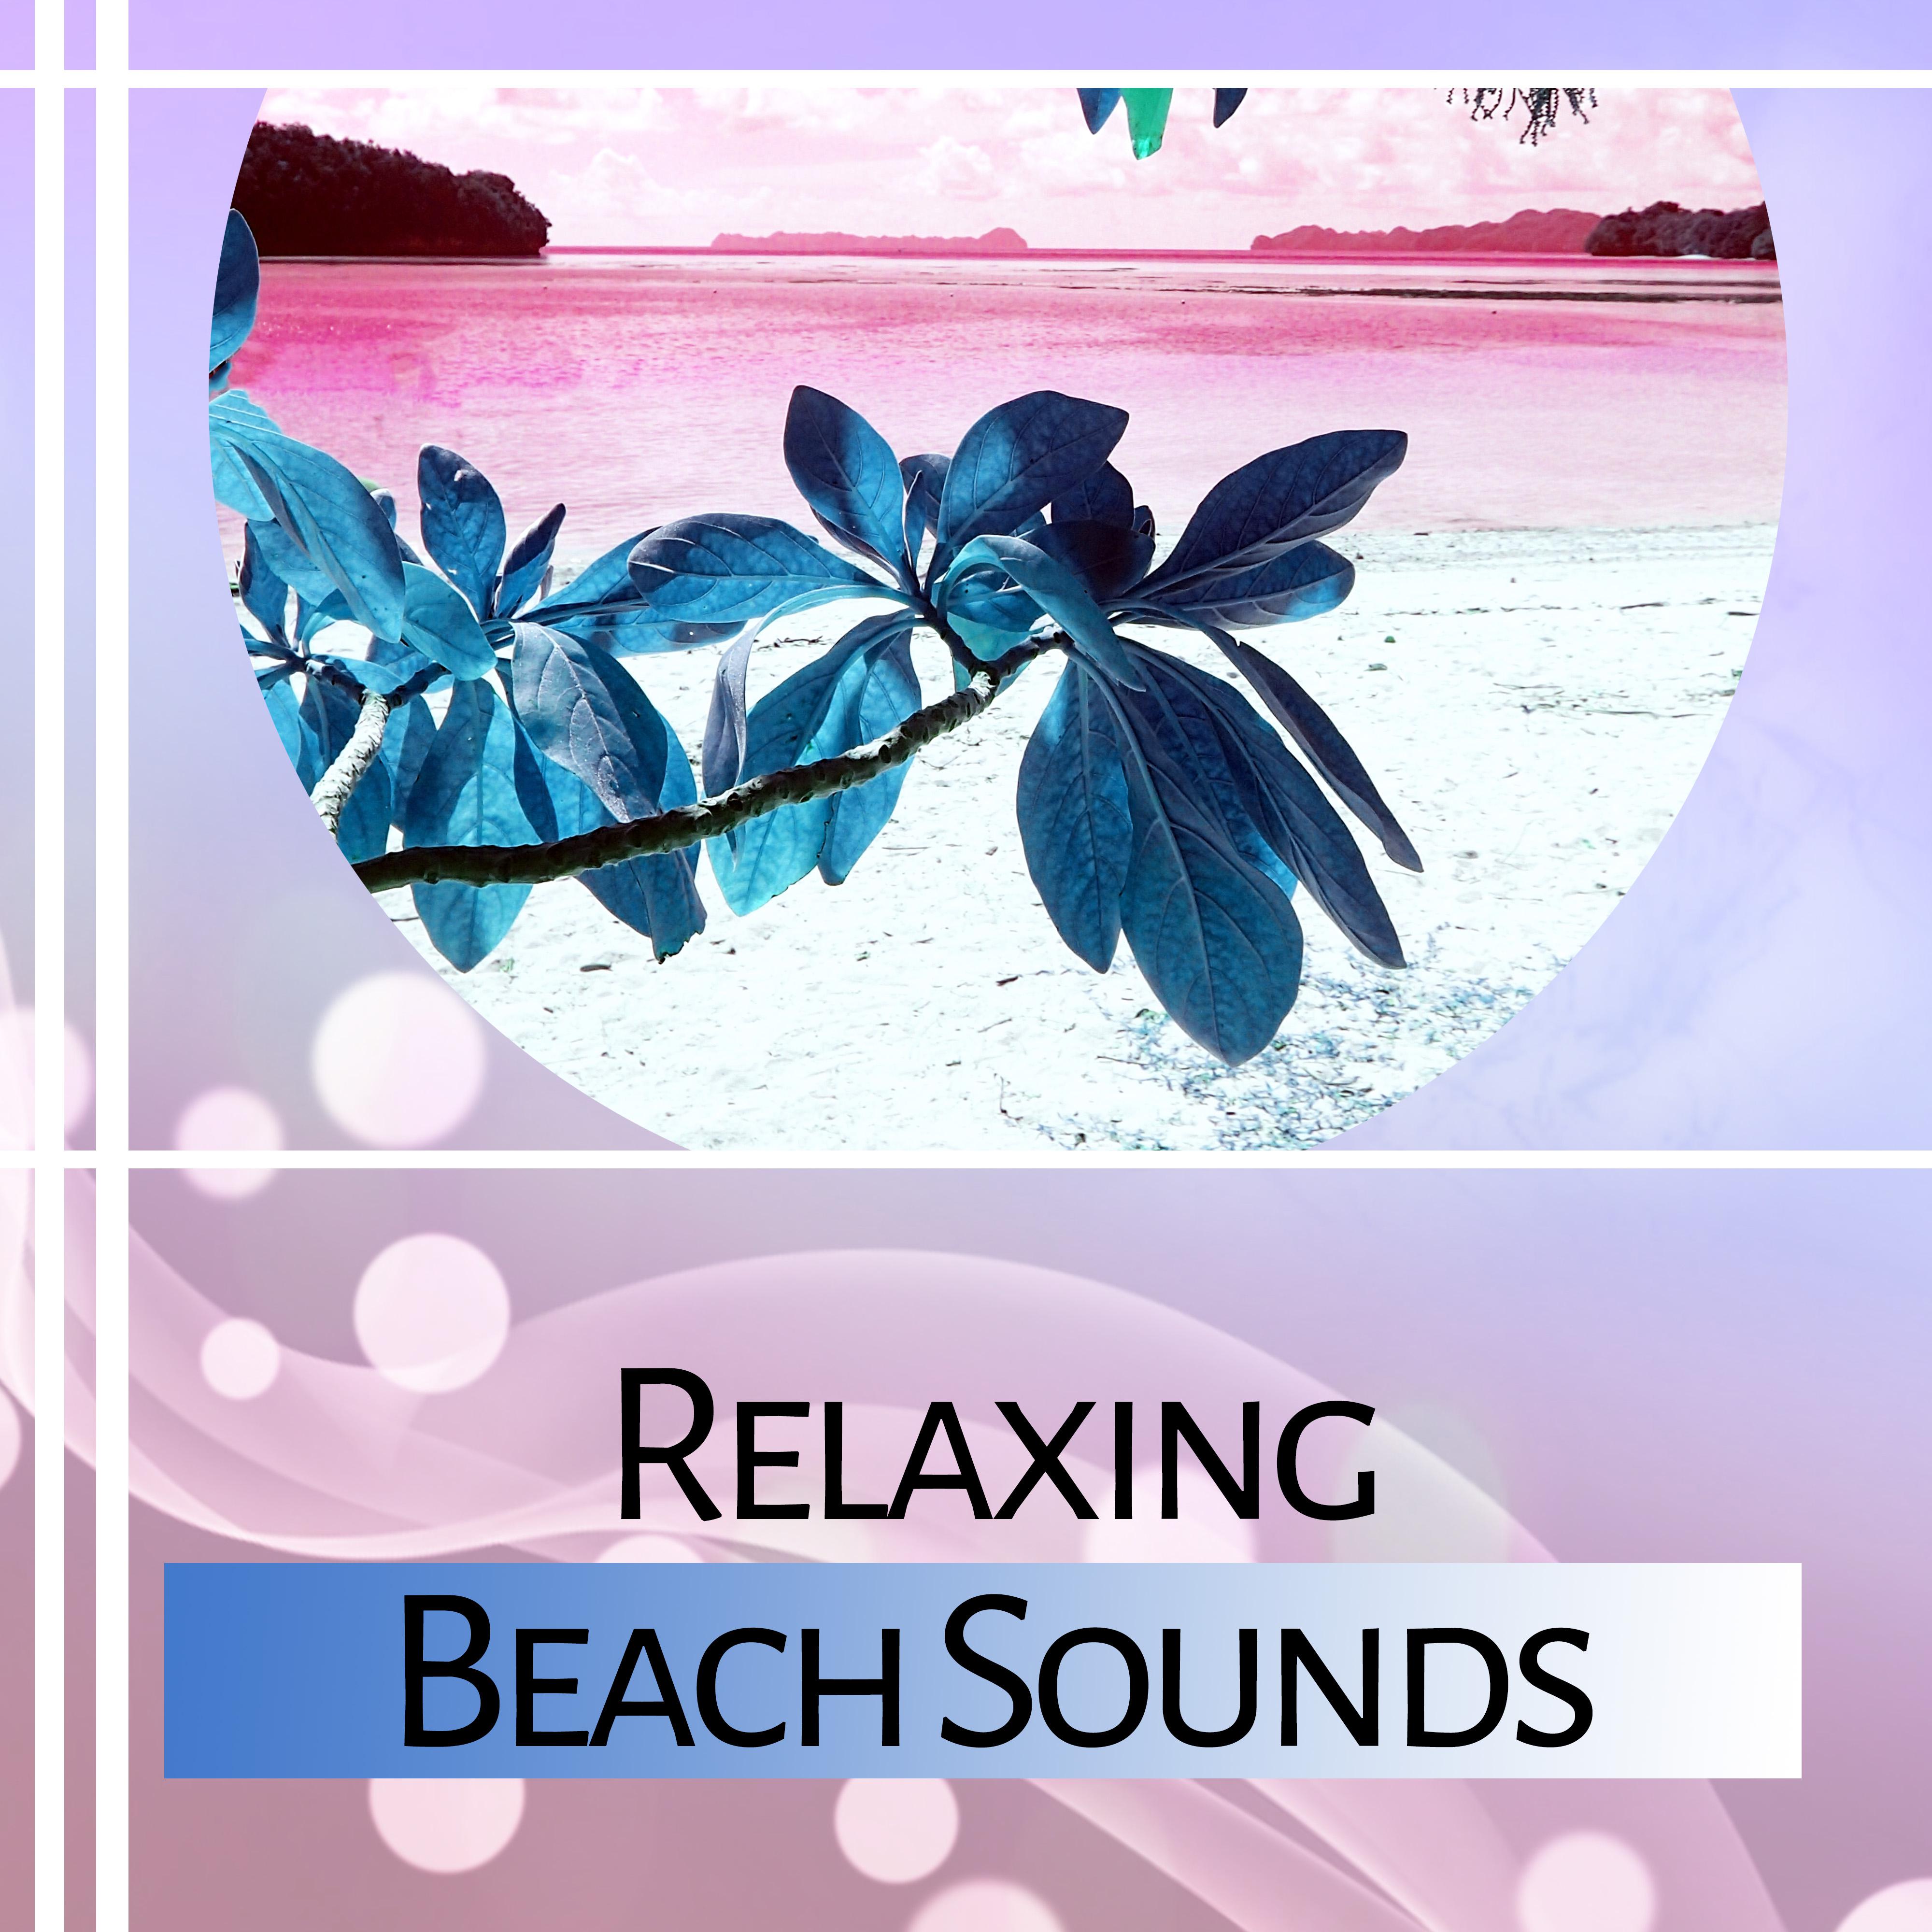 Relaxing Beach Sounds – Calm Down & Relax, Beach Lounge, Chill Out Music, Summer Journey